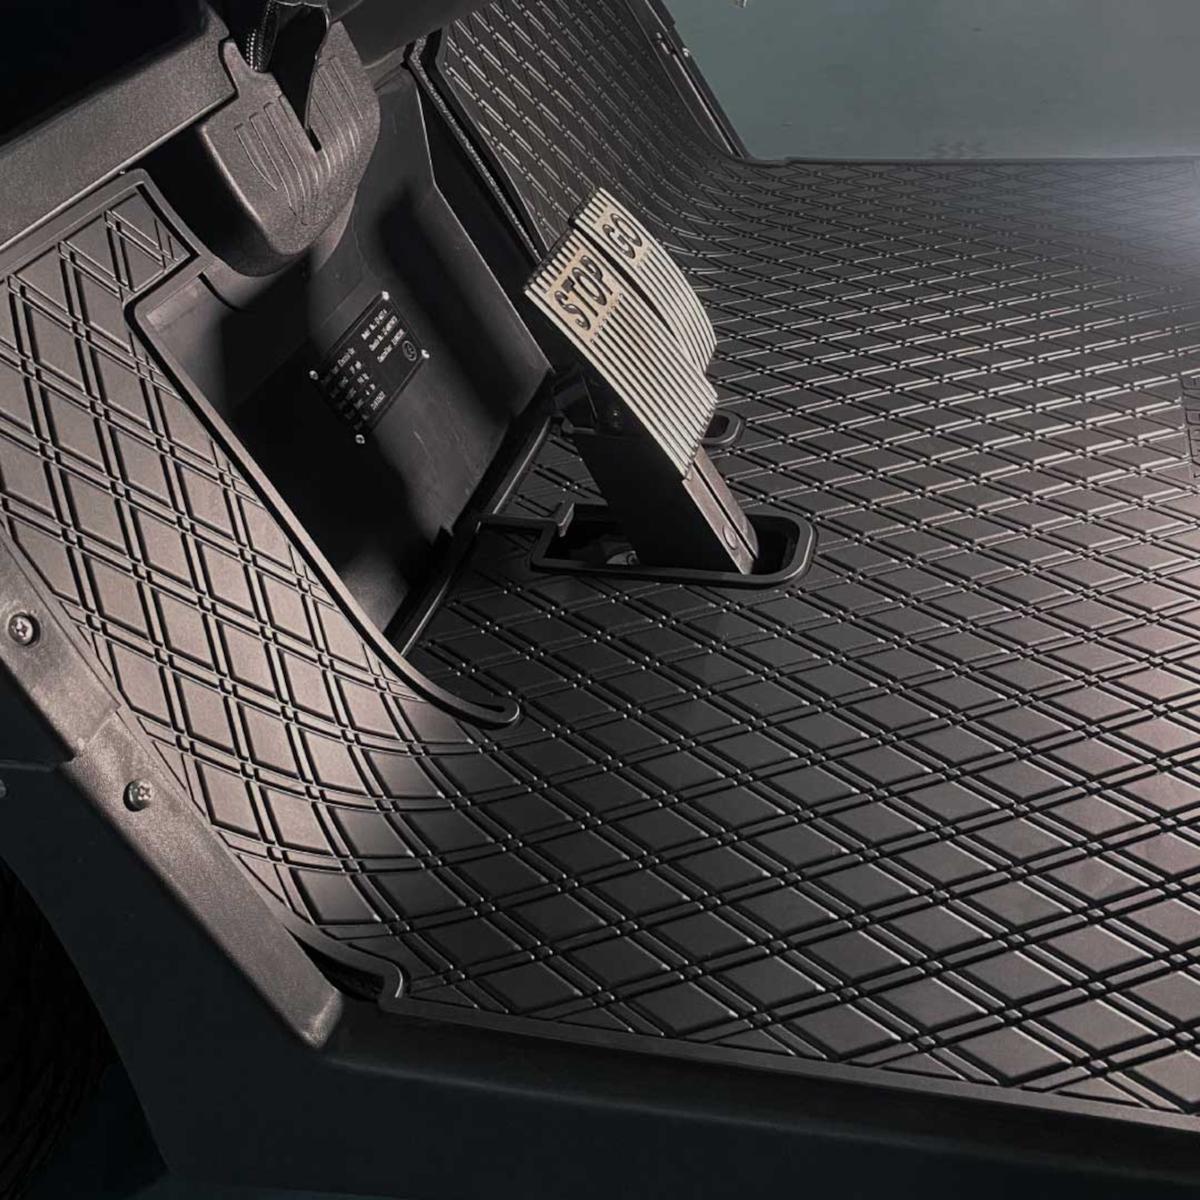 Xtreme Floor Mats for ICON / Advanced EV1 - All Black